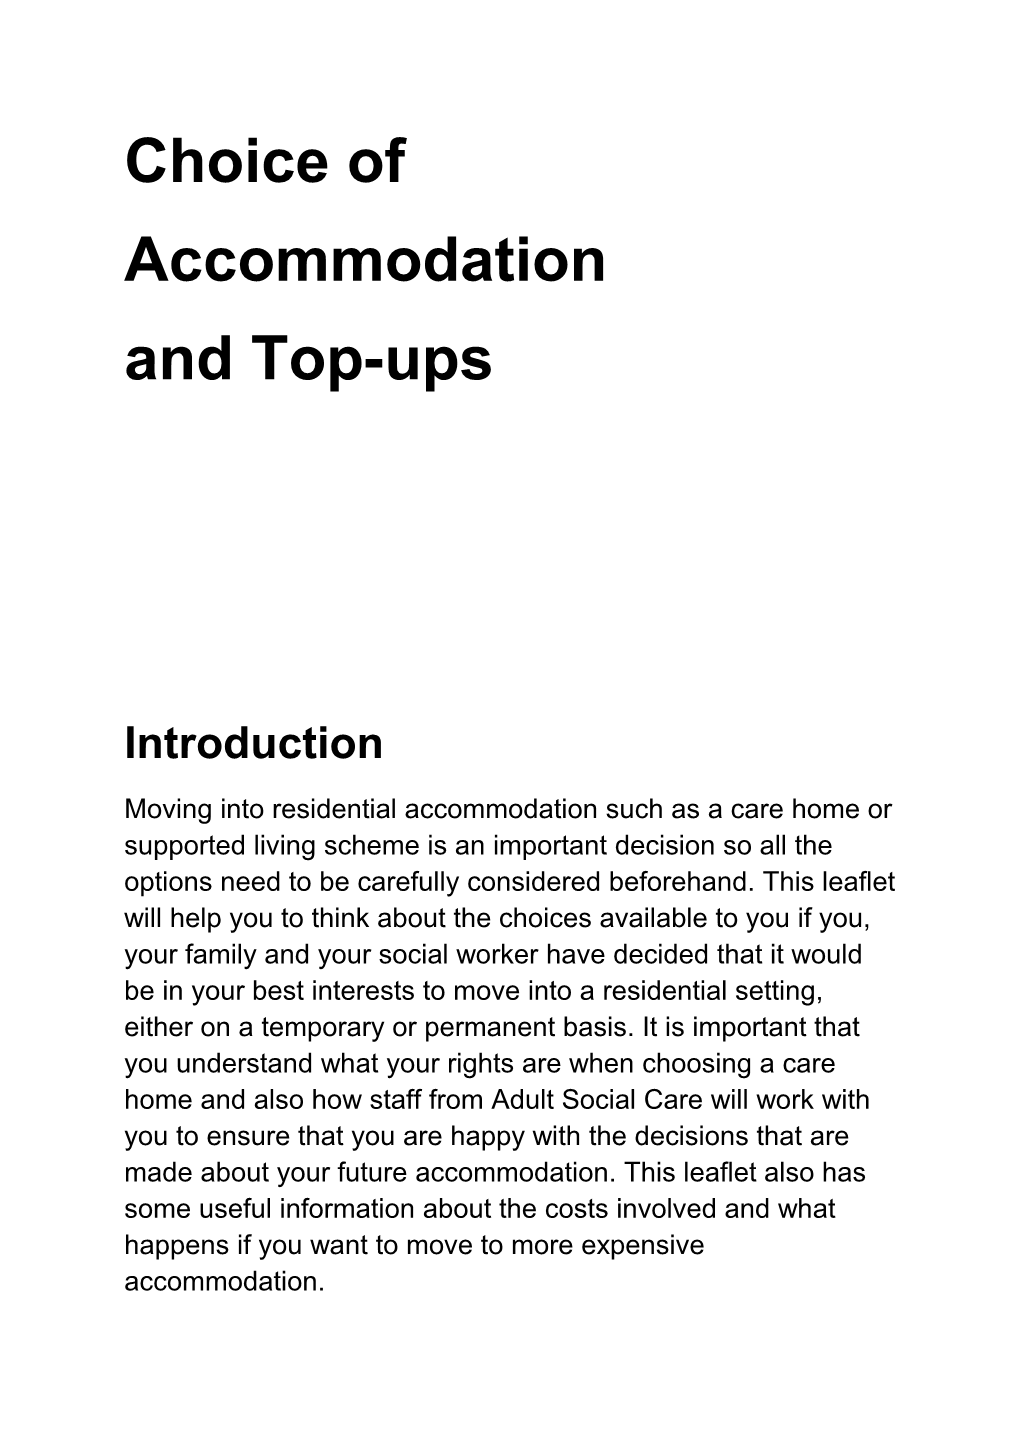 Type of Accommodation